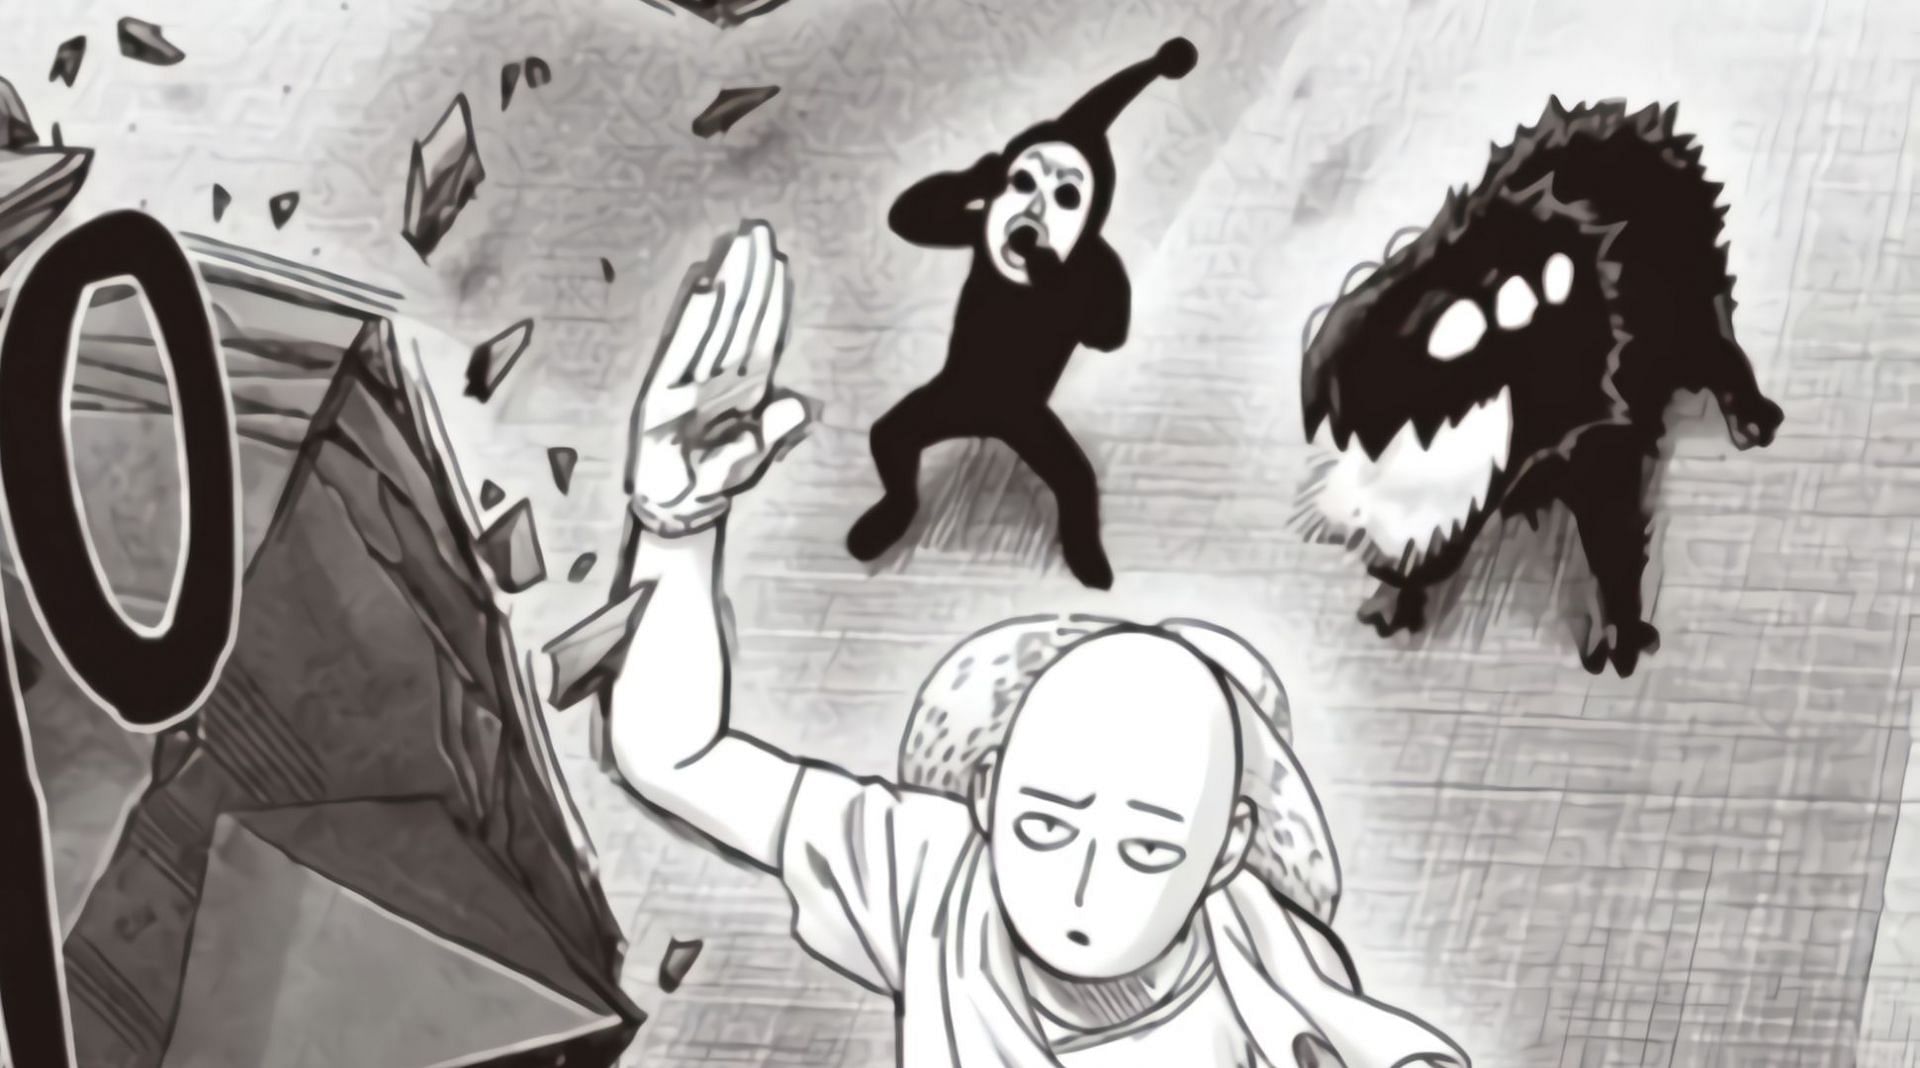 Saitama destroying the robot in One Punch Man chapter 172 (Image via Shueisha)